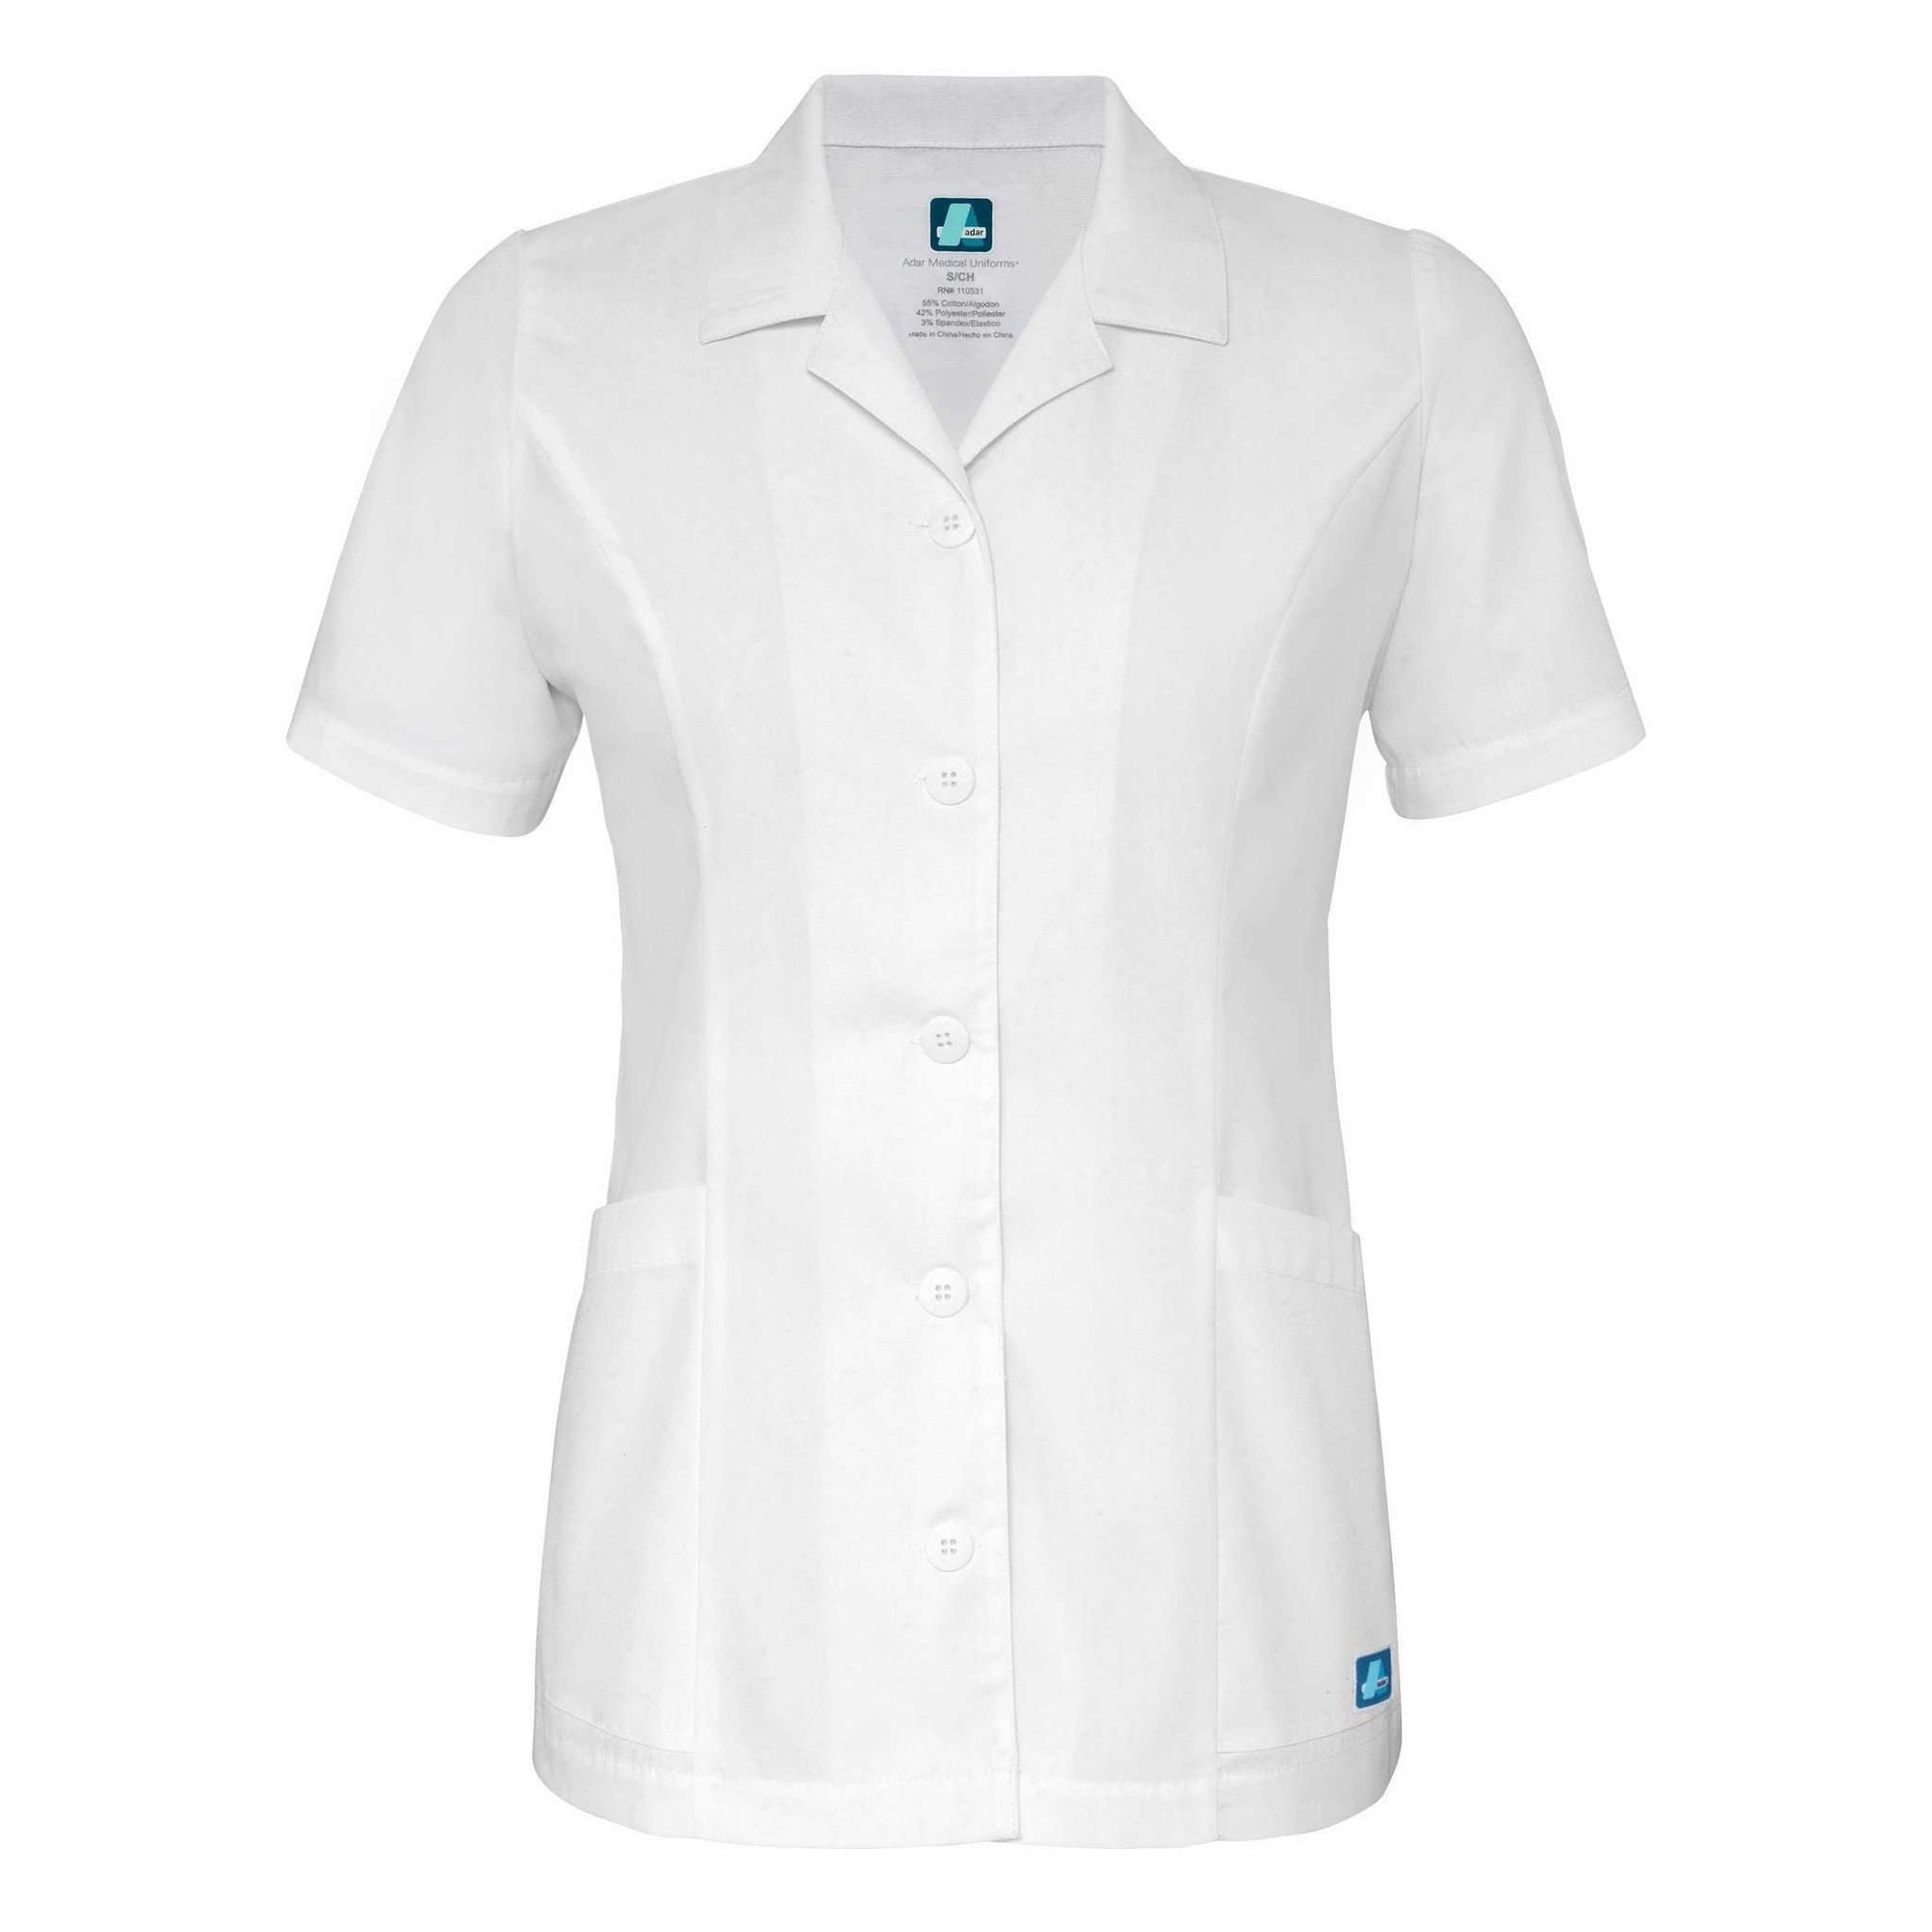  Adar - uniforms Medical Uniform Tops uniforms online ADAR Universal Lapel Collar Buttoned Top - SchoolUniforms.com